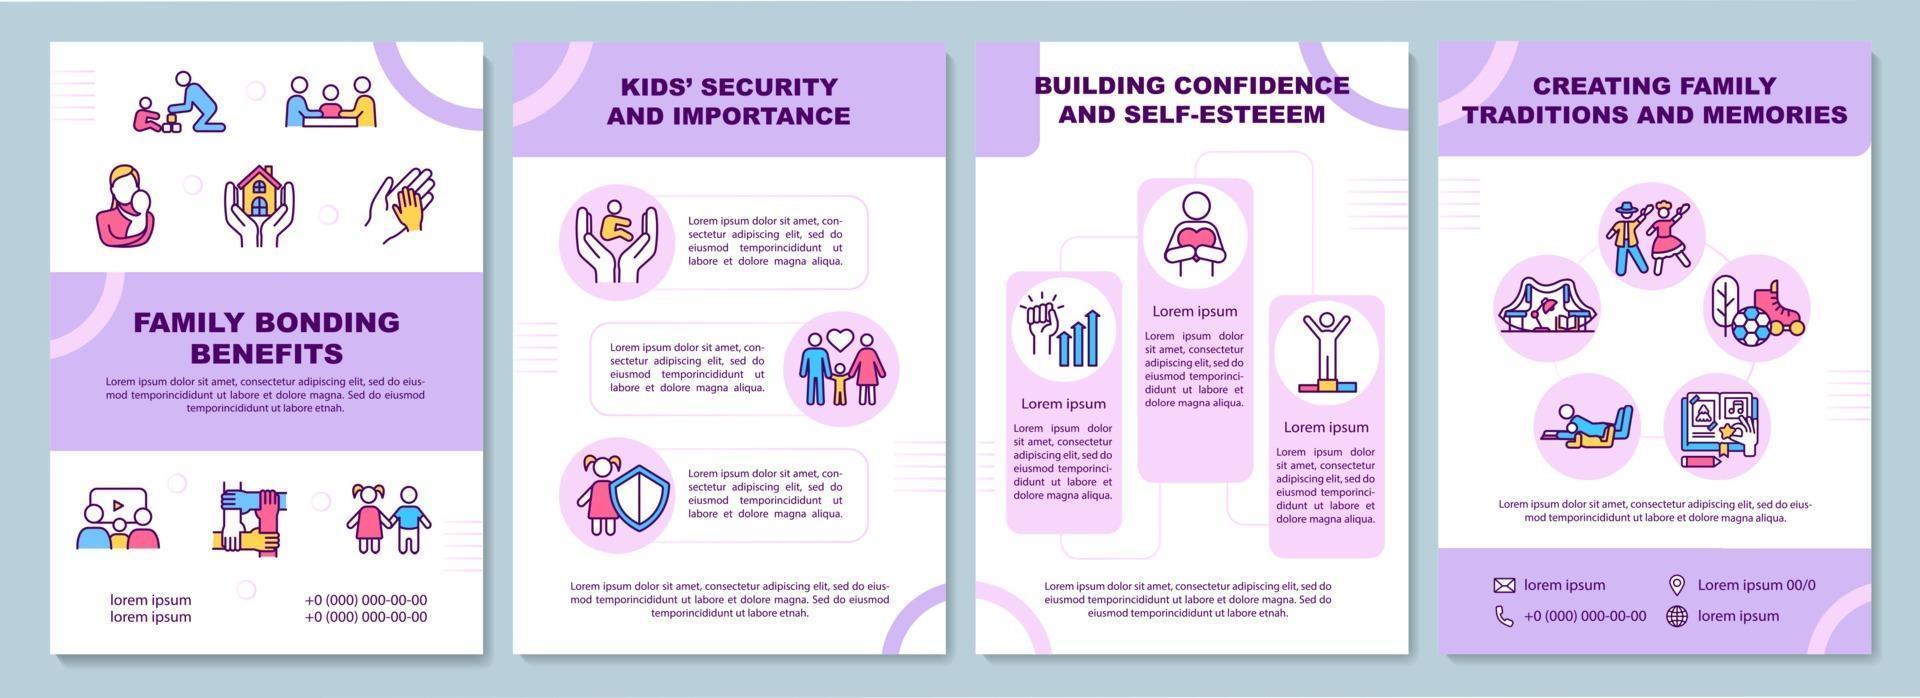 Family bonding benefits brochure template vector